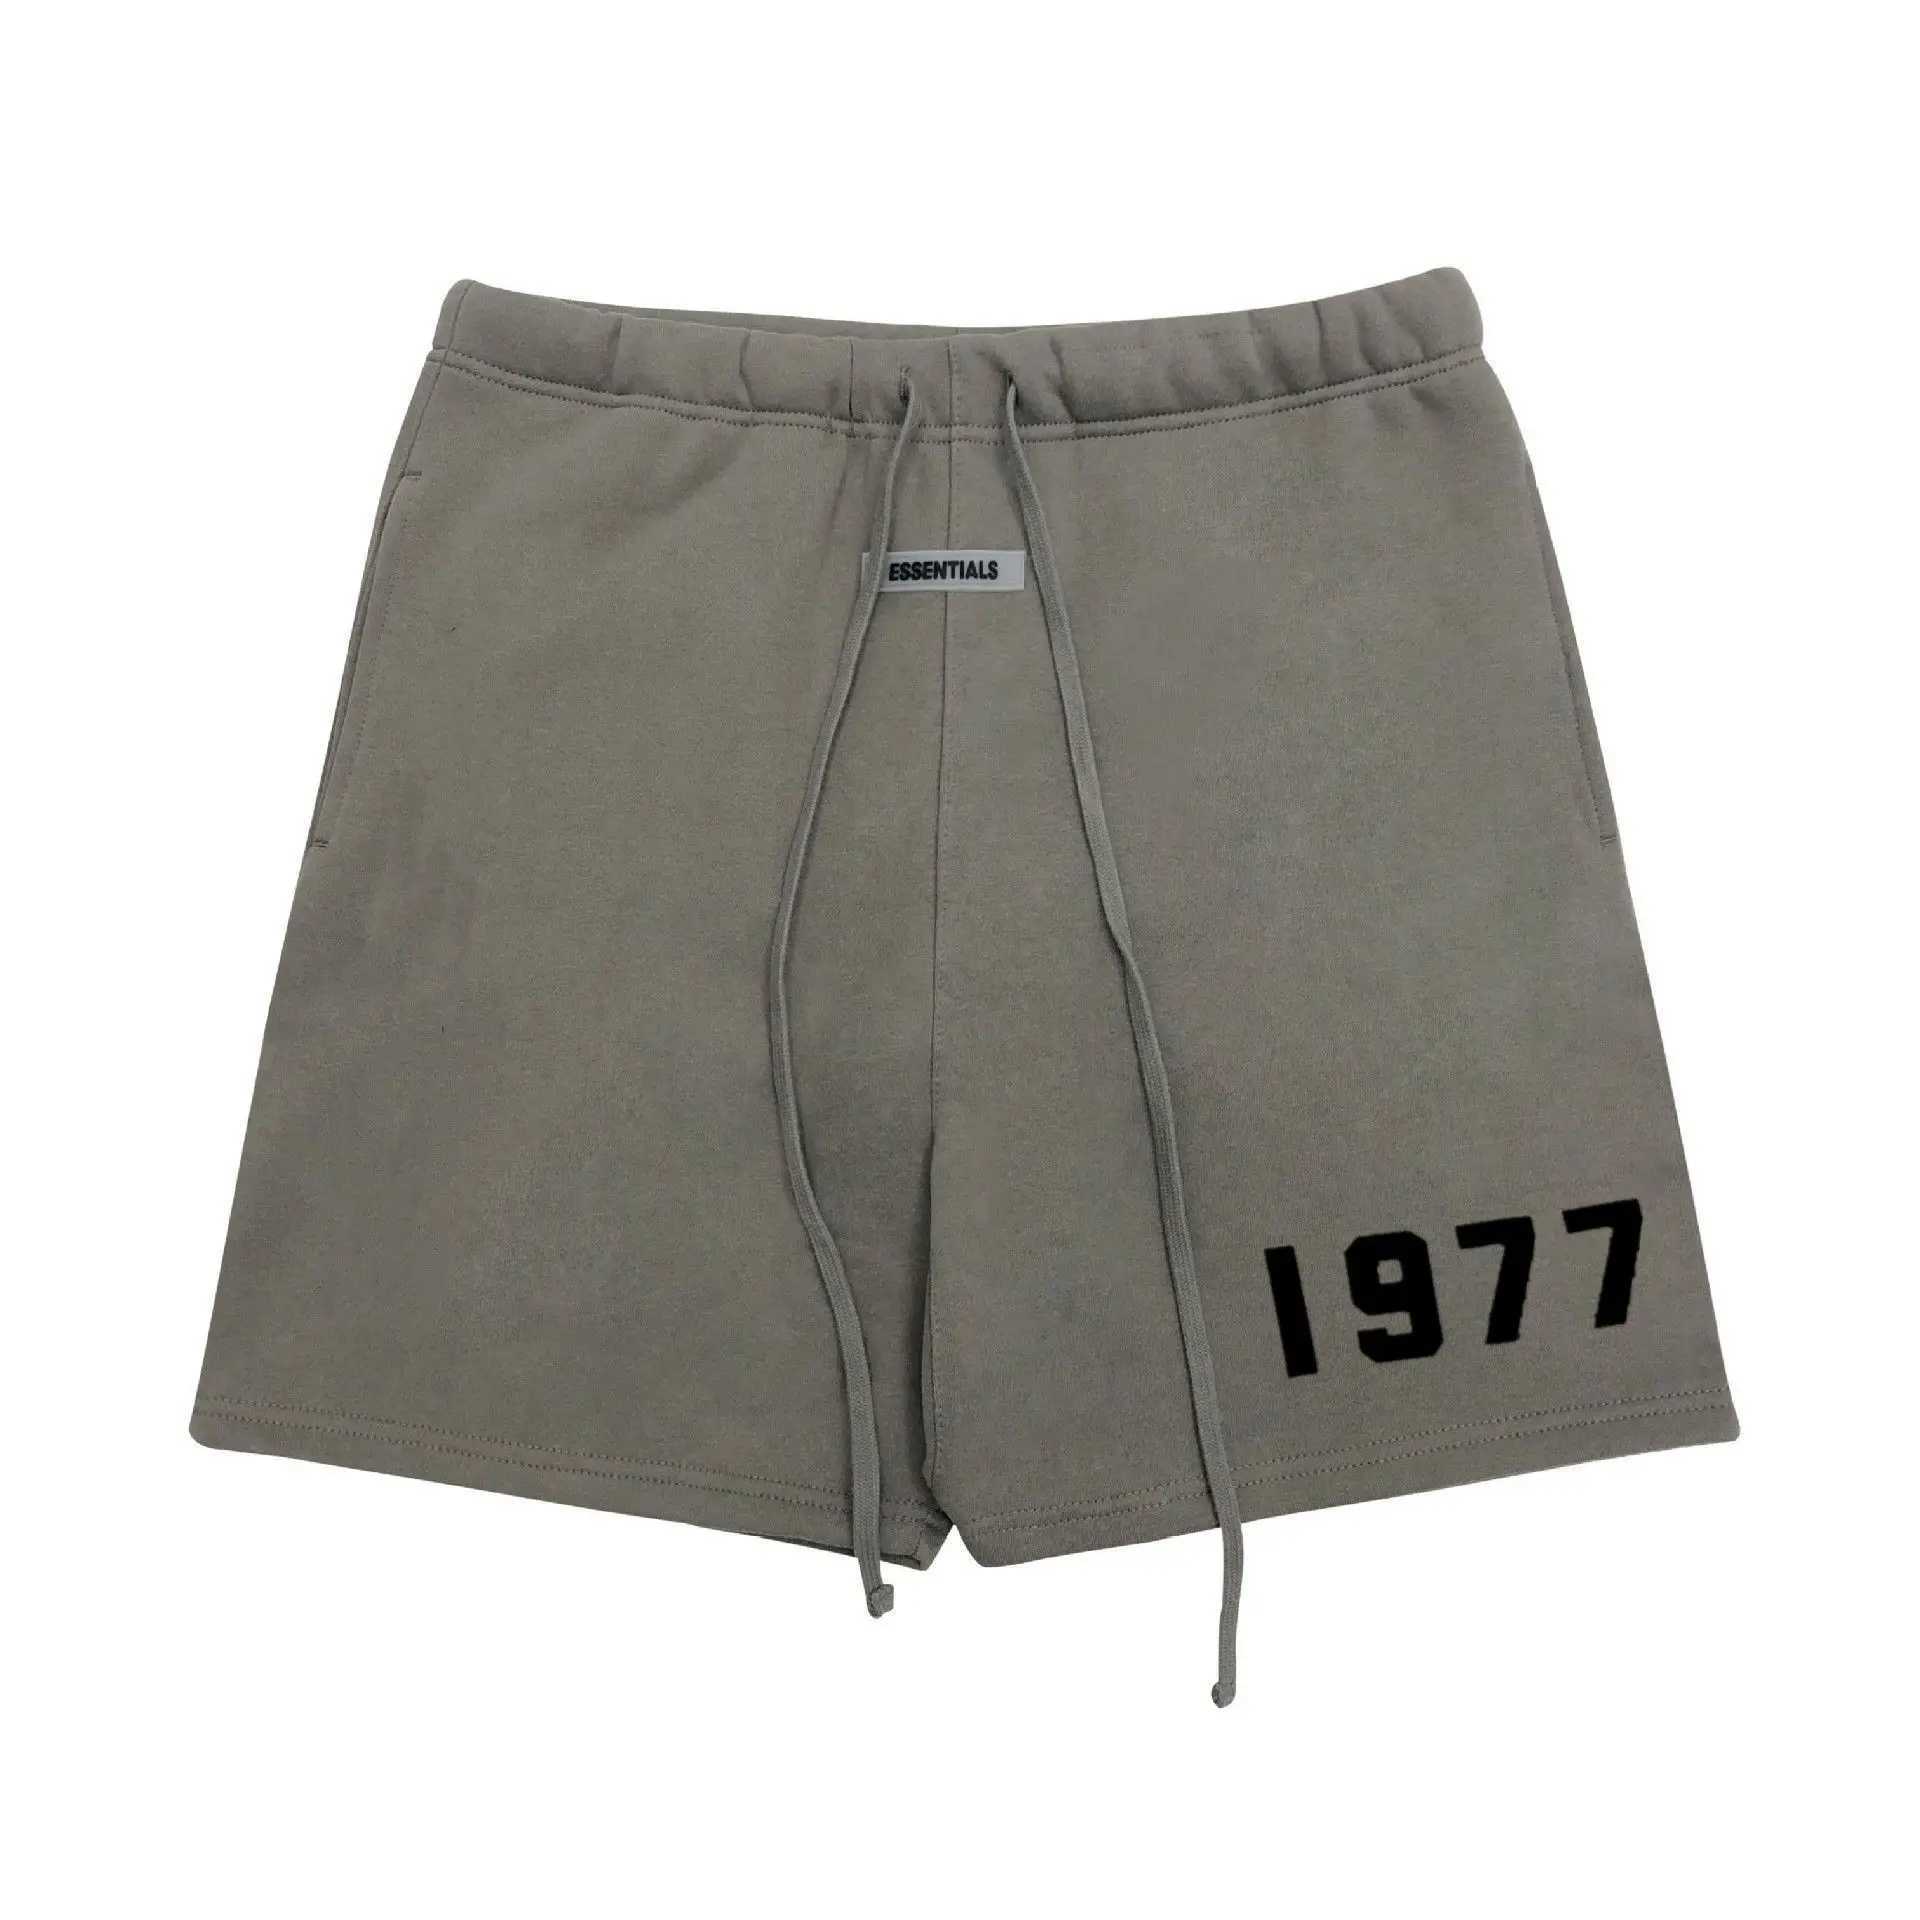 Pantalon masculin shorts en coton Street Street Running Sports Pantal